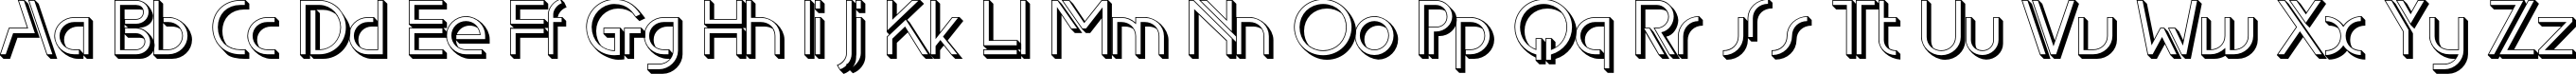 Пример написания английского алфавита шрифтом EdgeLineShadow